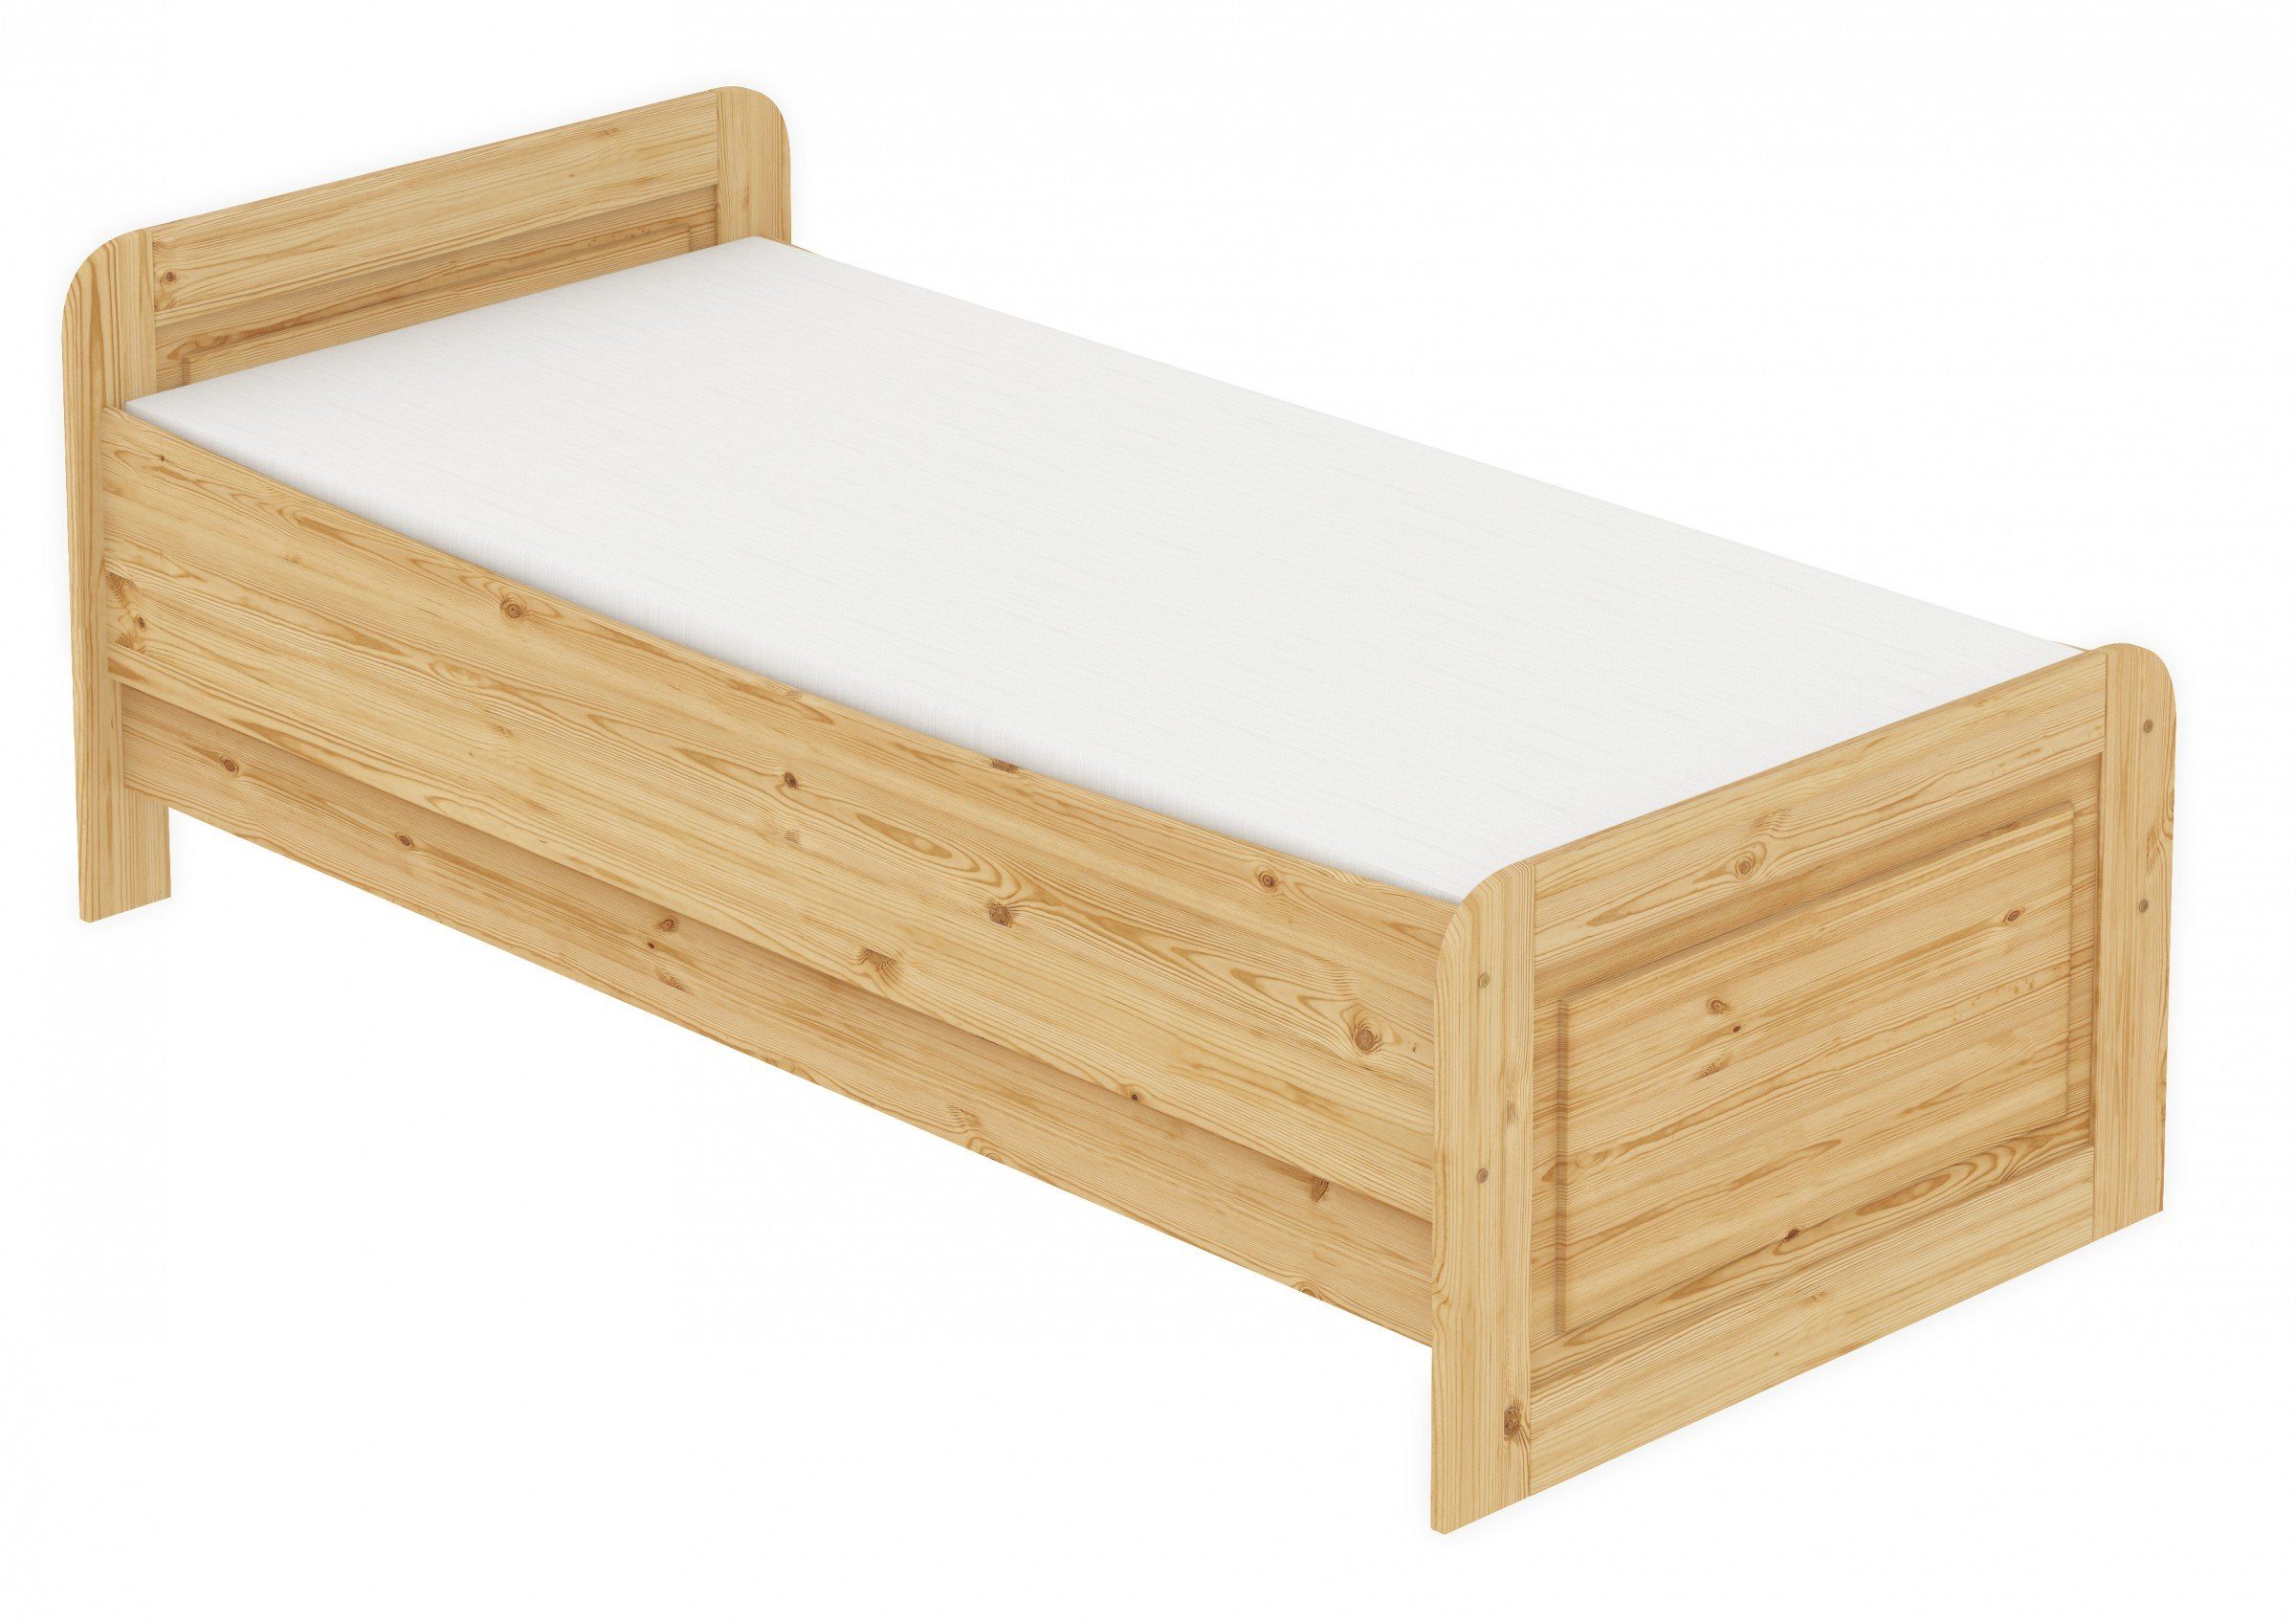 ERST-HOLZ Bett Bett extra hoch 100x200 Kiefer massiv Rollrost u. Matratze, Kieferfarblos lackiert